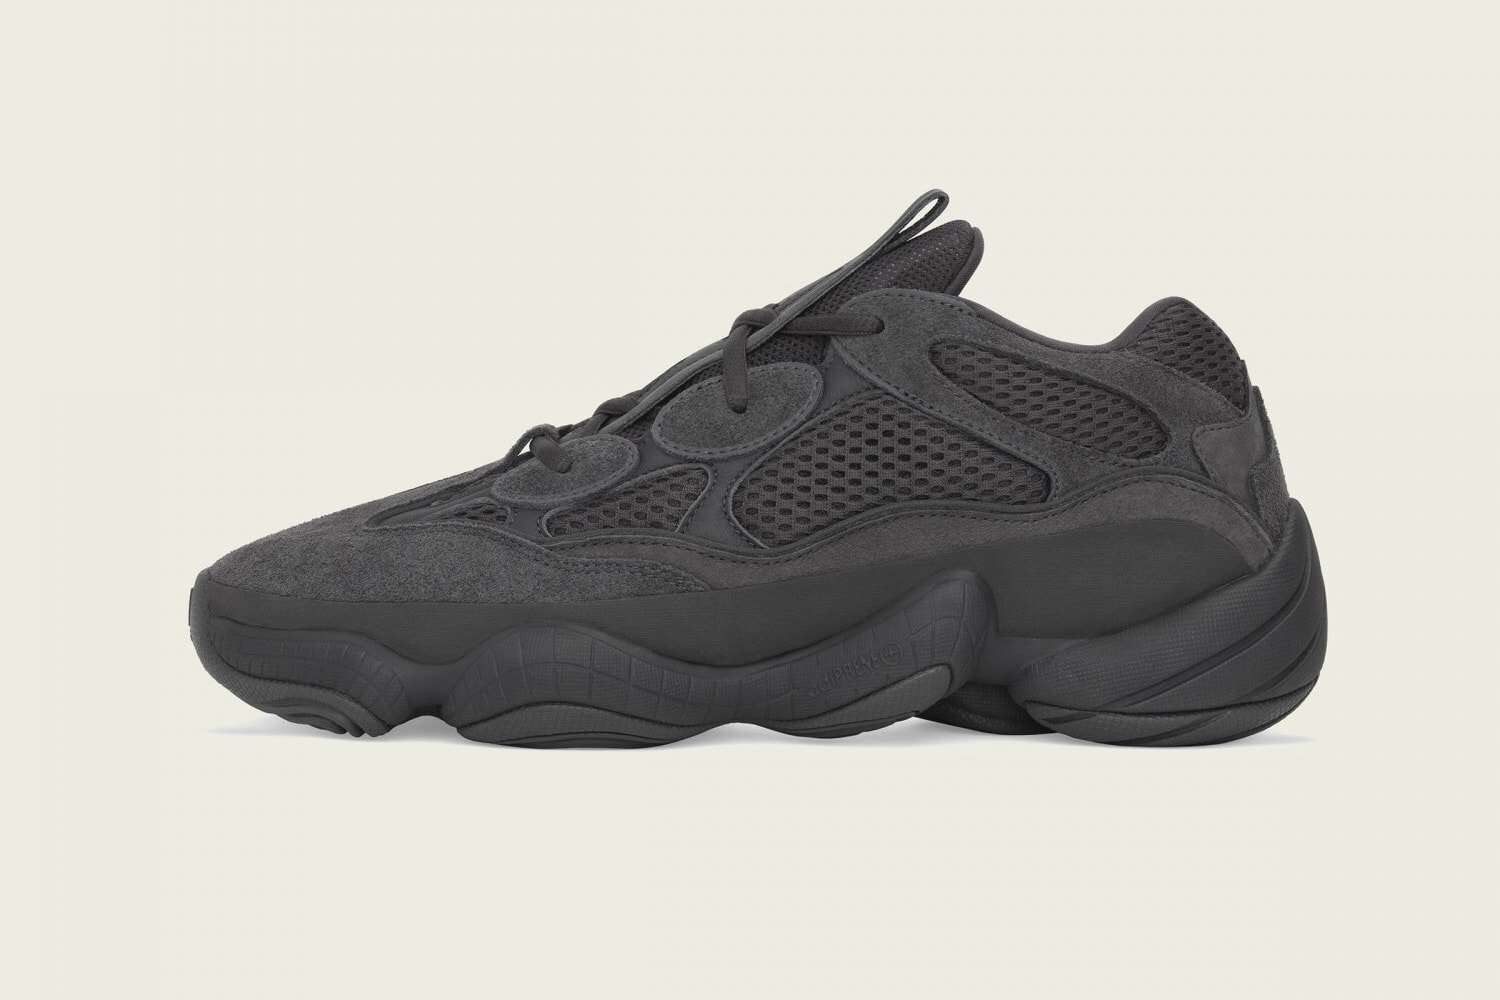 adidas yeezy 500 utility black release info footwear kanye west 2018 july